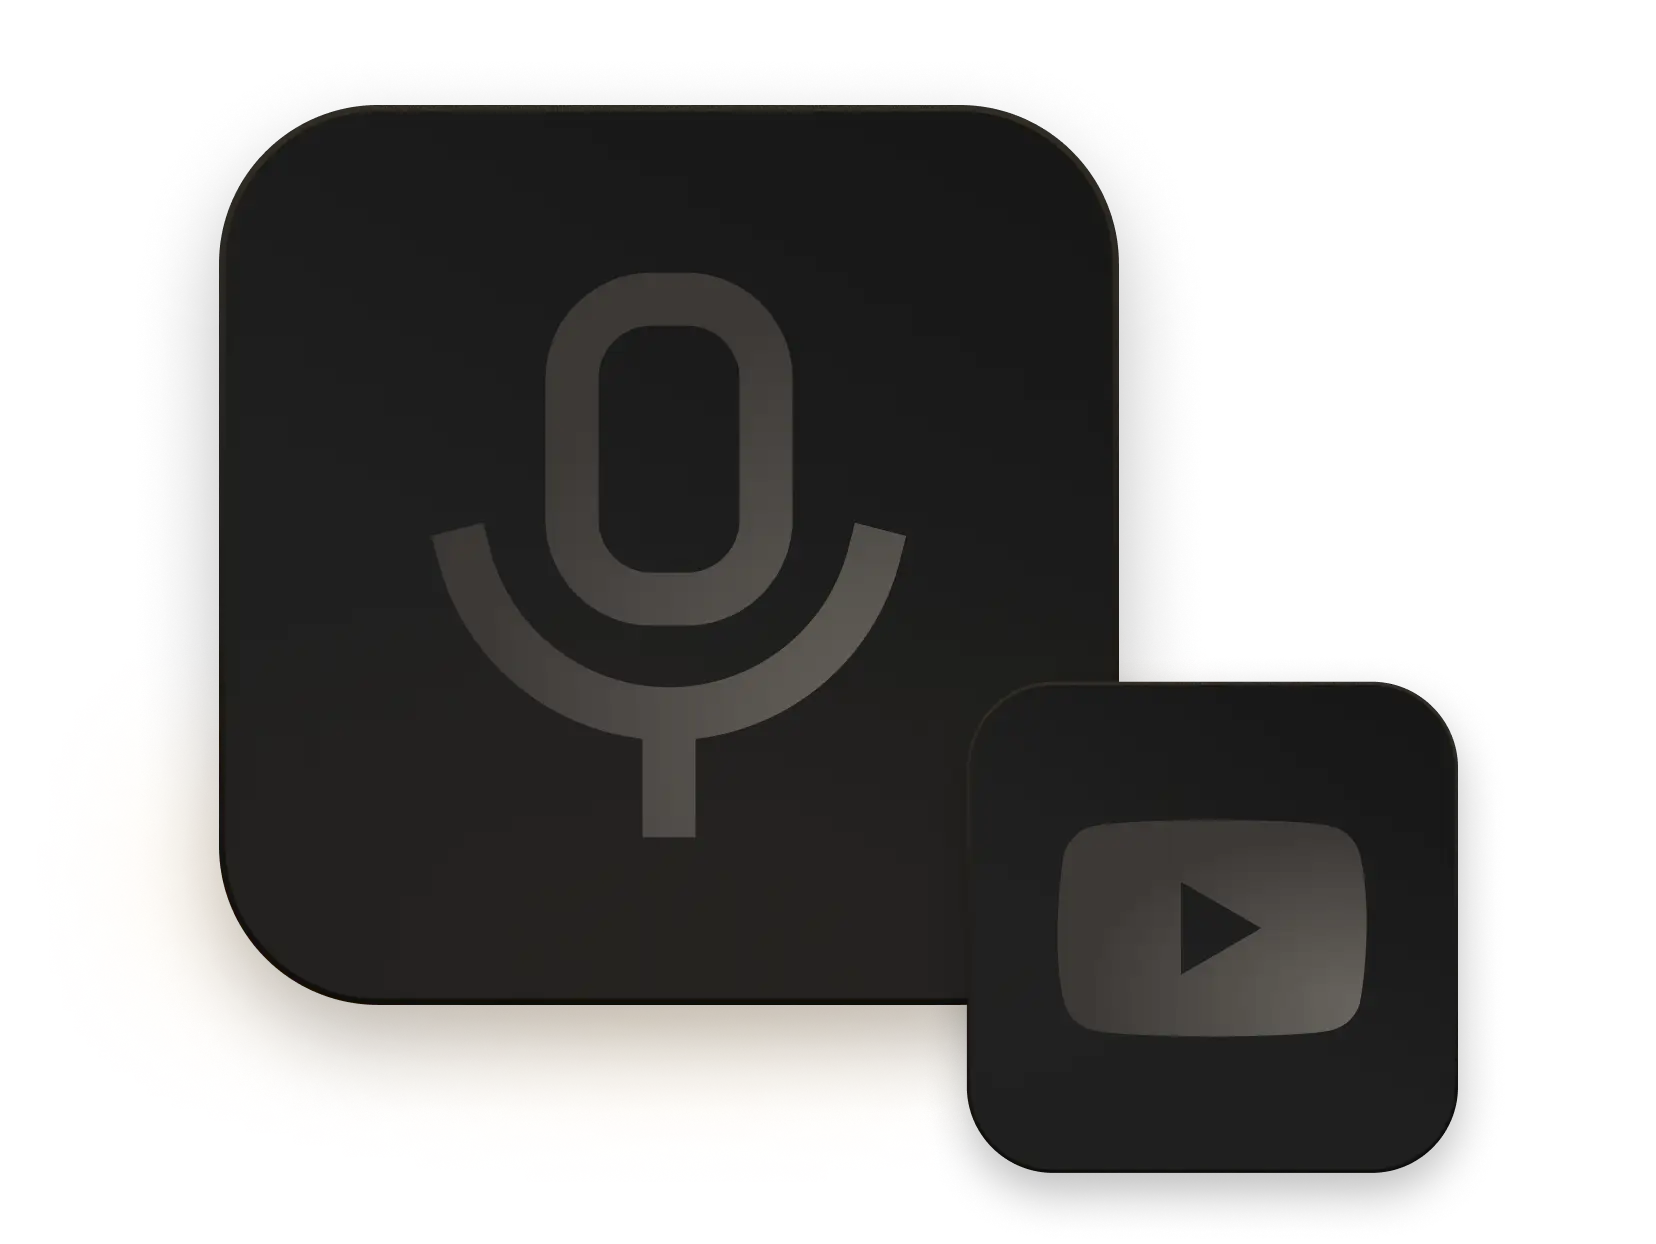 Podcast mic & YouTube icon